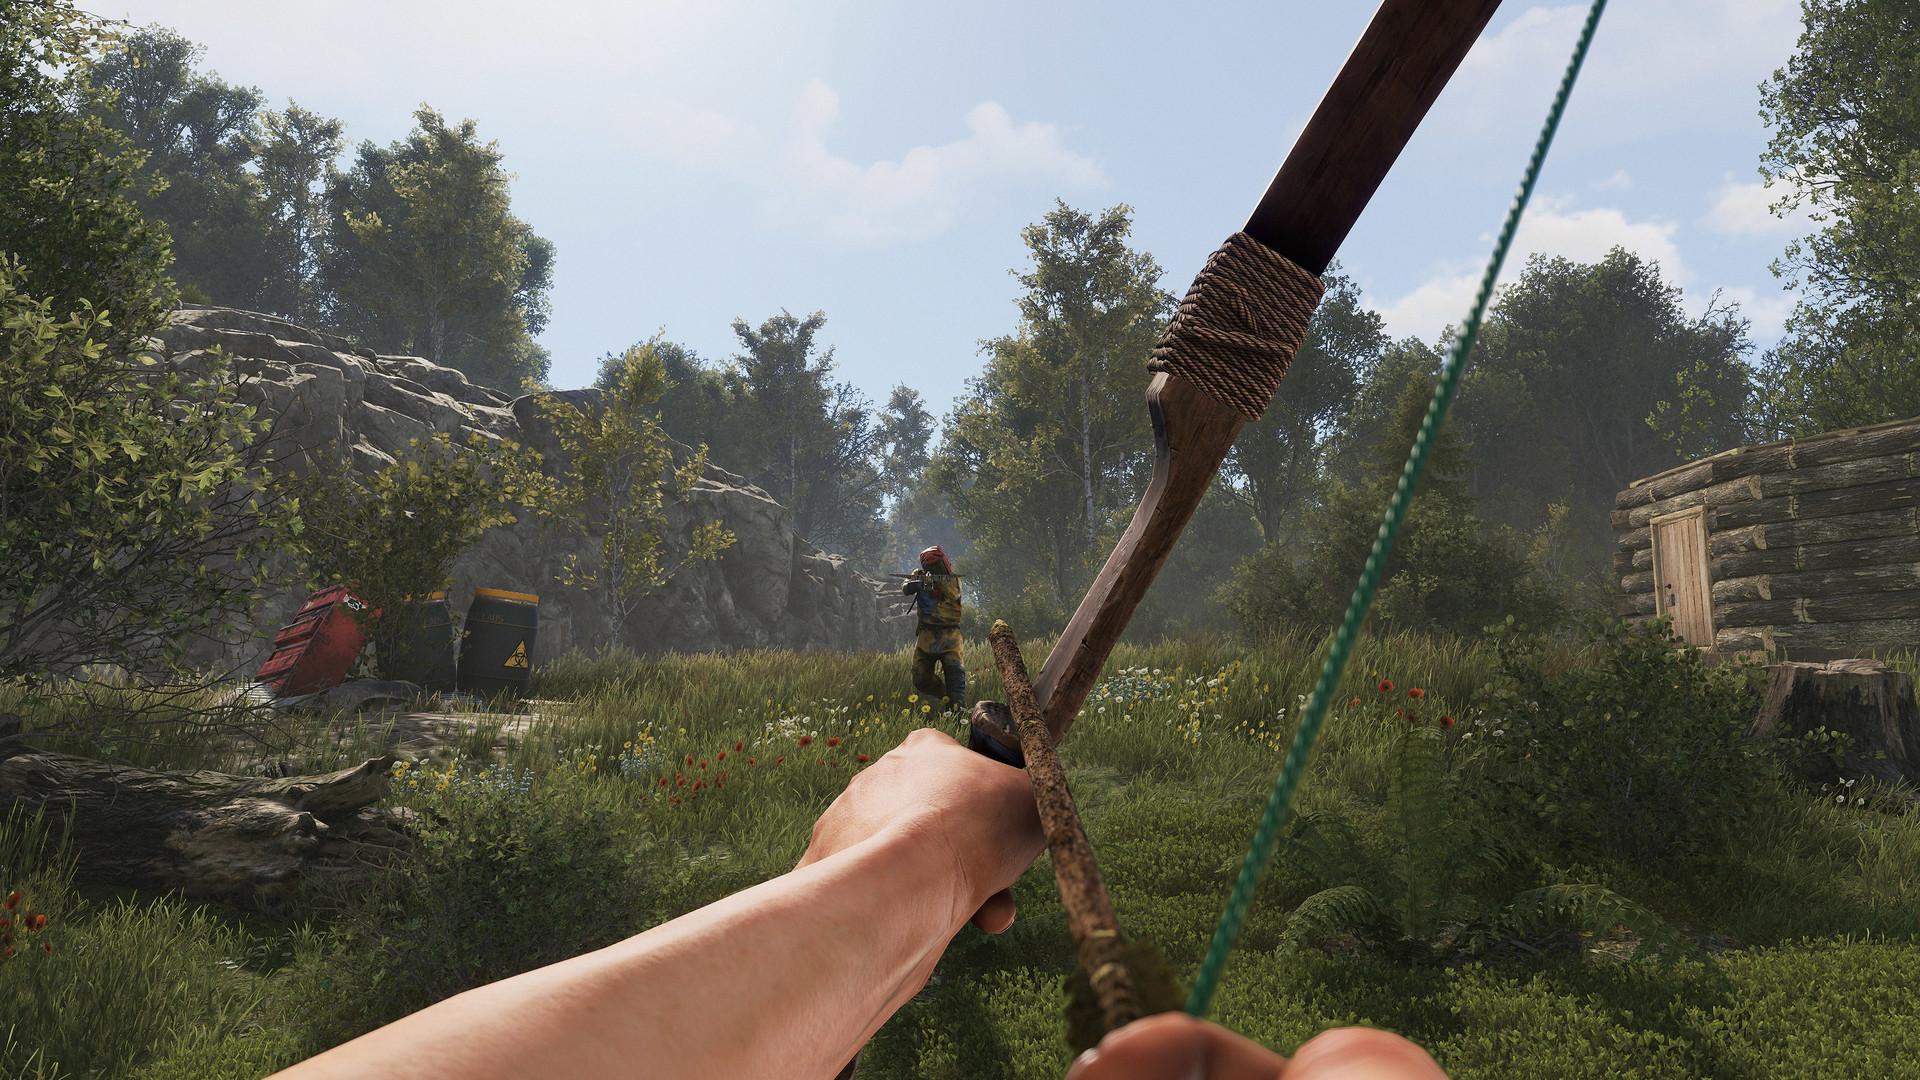 Screenshot №2 from game Rust